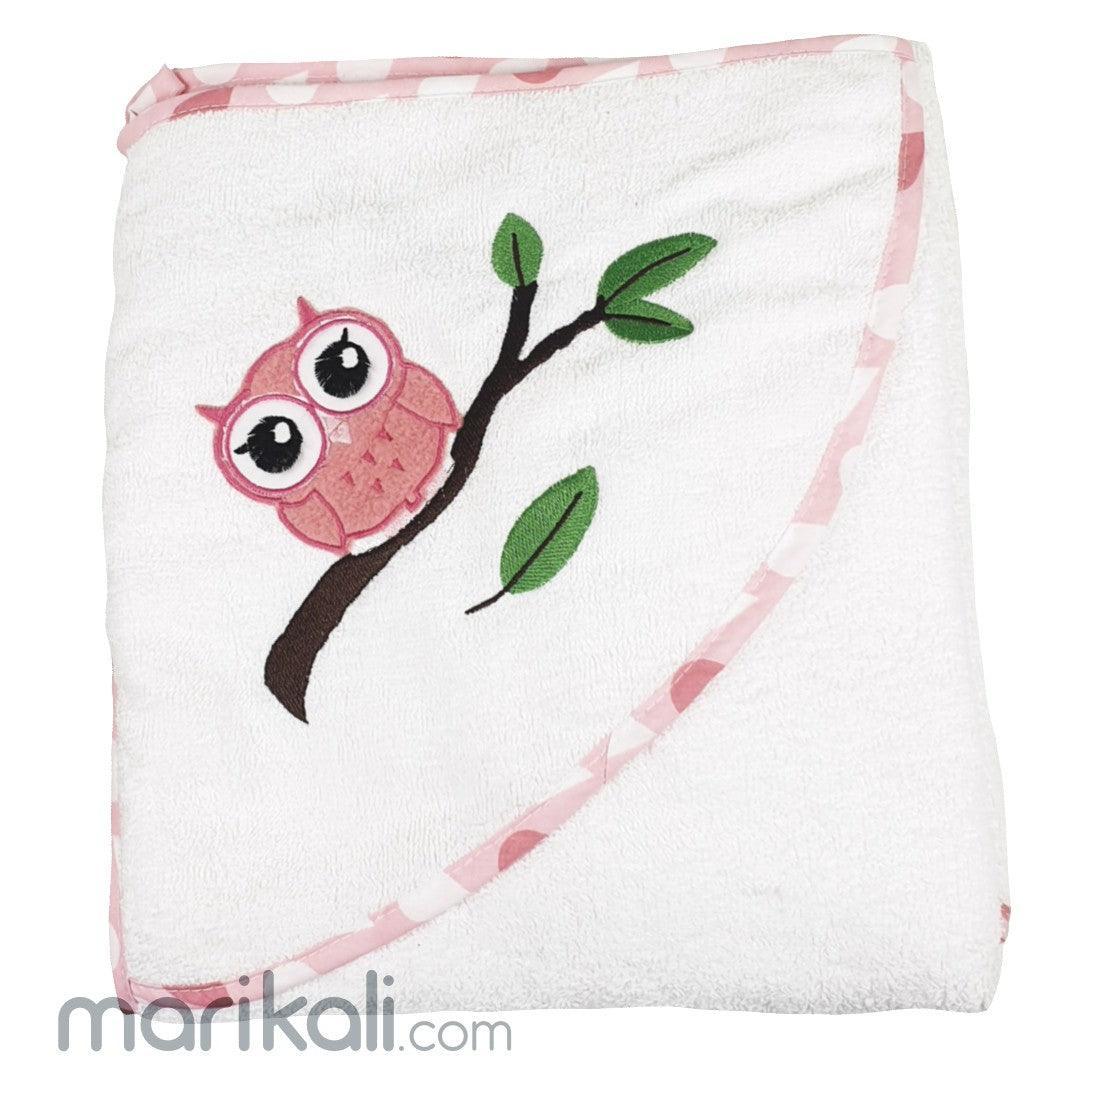 mk Collection - mk Collection Bath Towel Owl Pink - Mari Kali Stores Cyprus